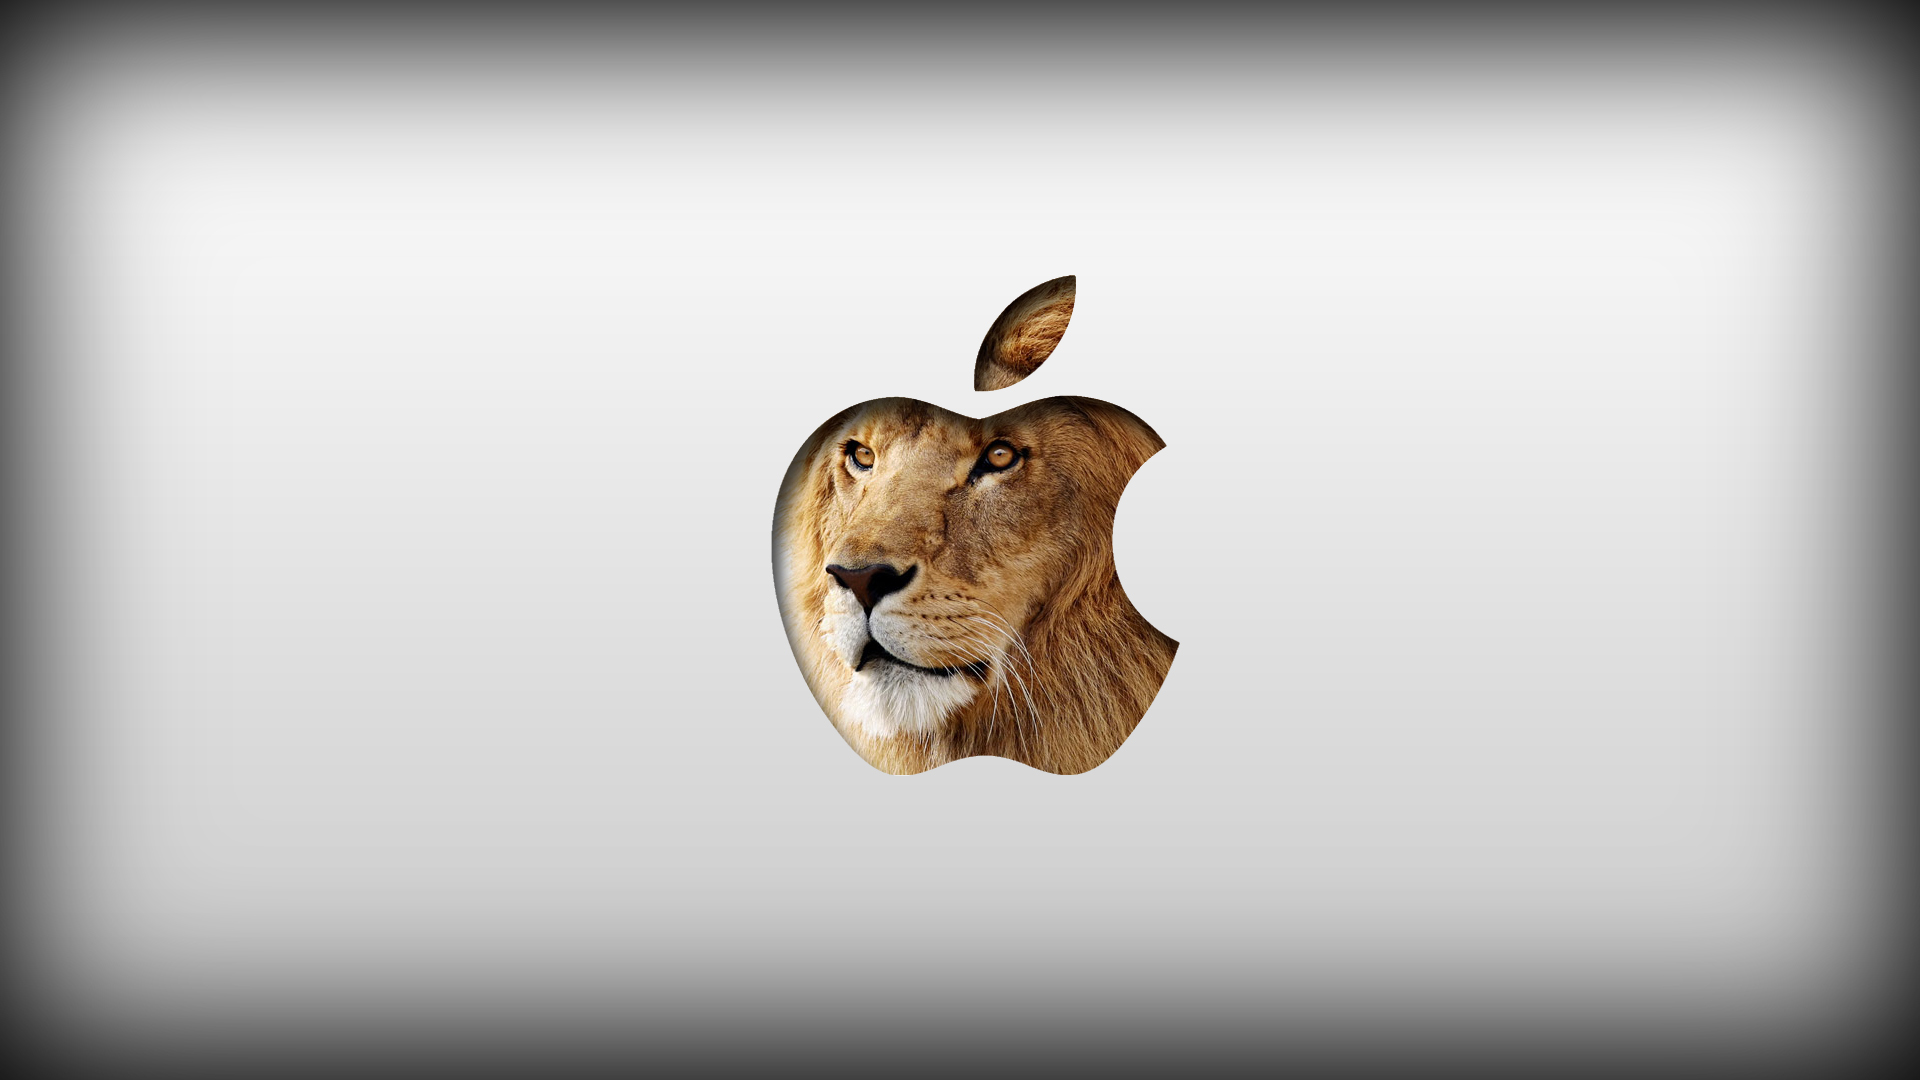 Top 10 Mac OS X Lion Desktop Backgrounds